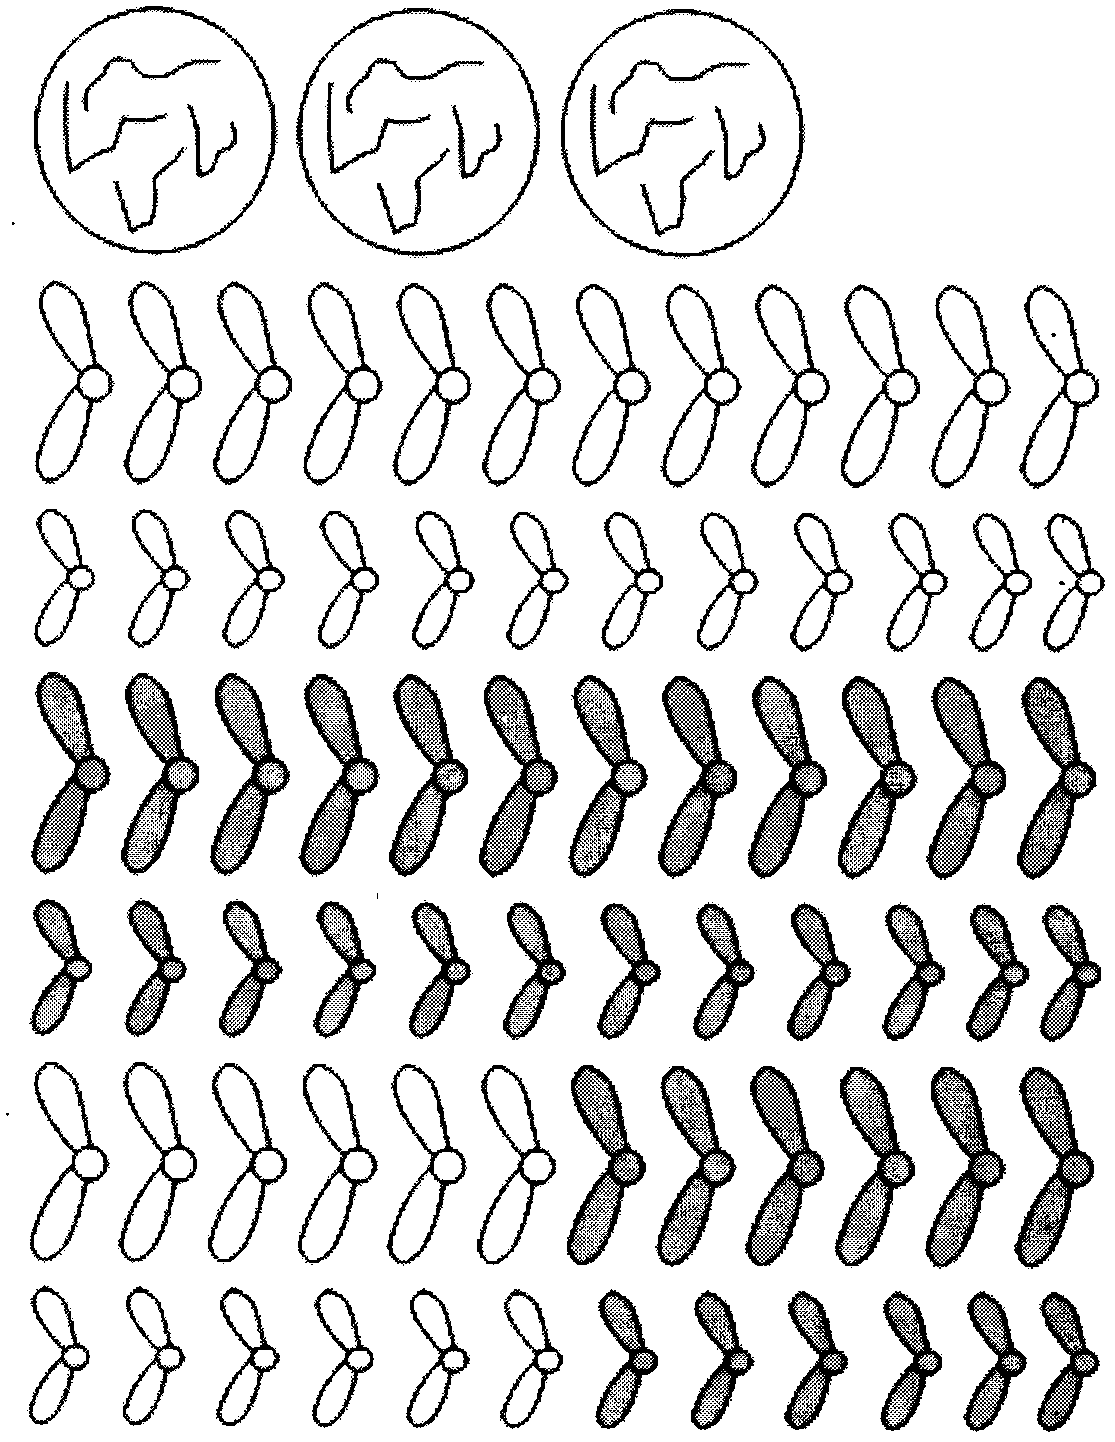 Cell division chromosome model jigsaw teaching aid